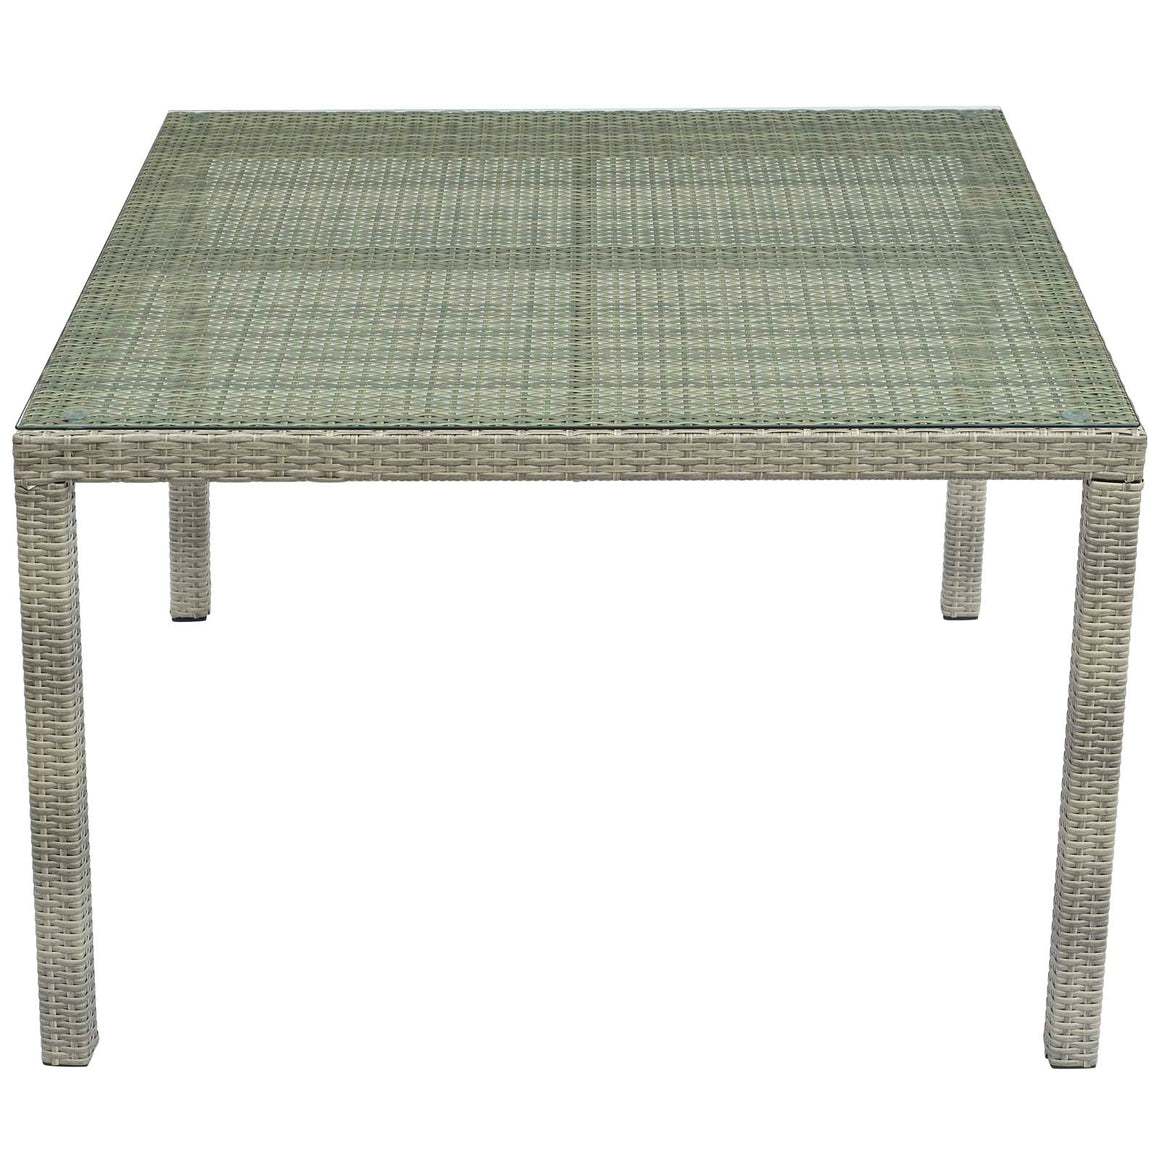 Conduit 47" Square Outdoor Patio Wicker Rattan Table in Light Gray